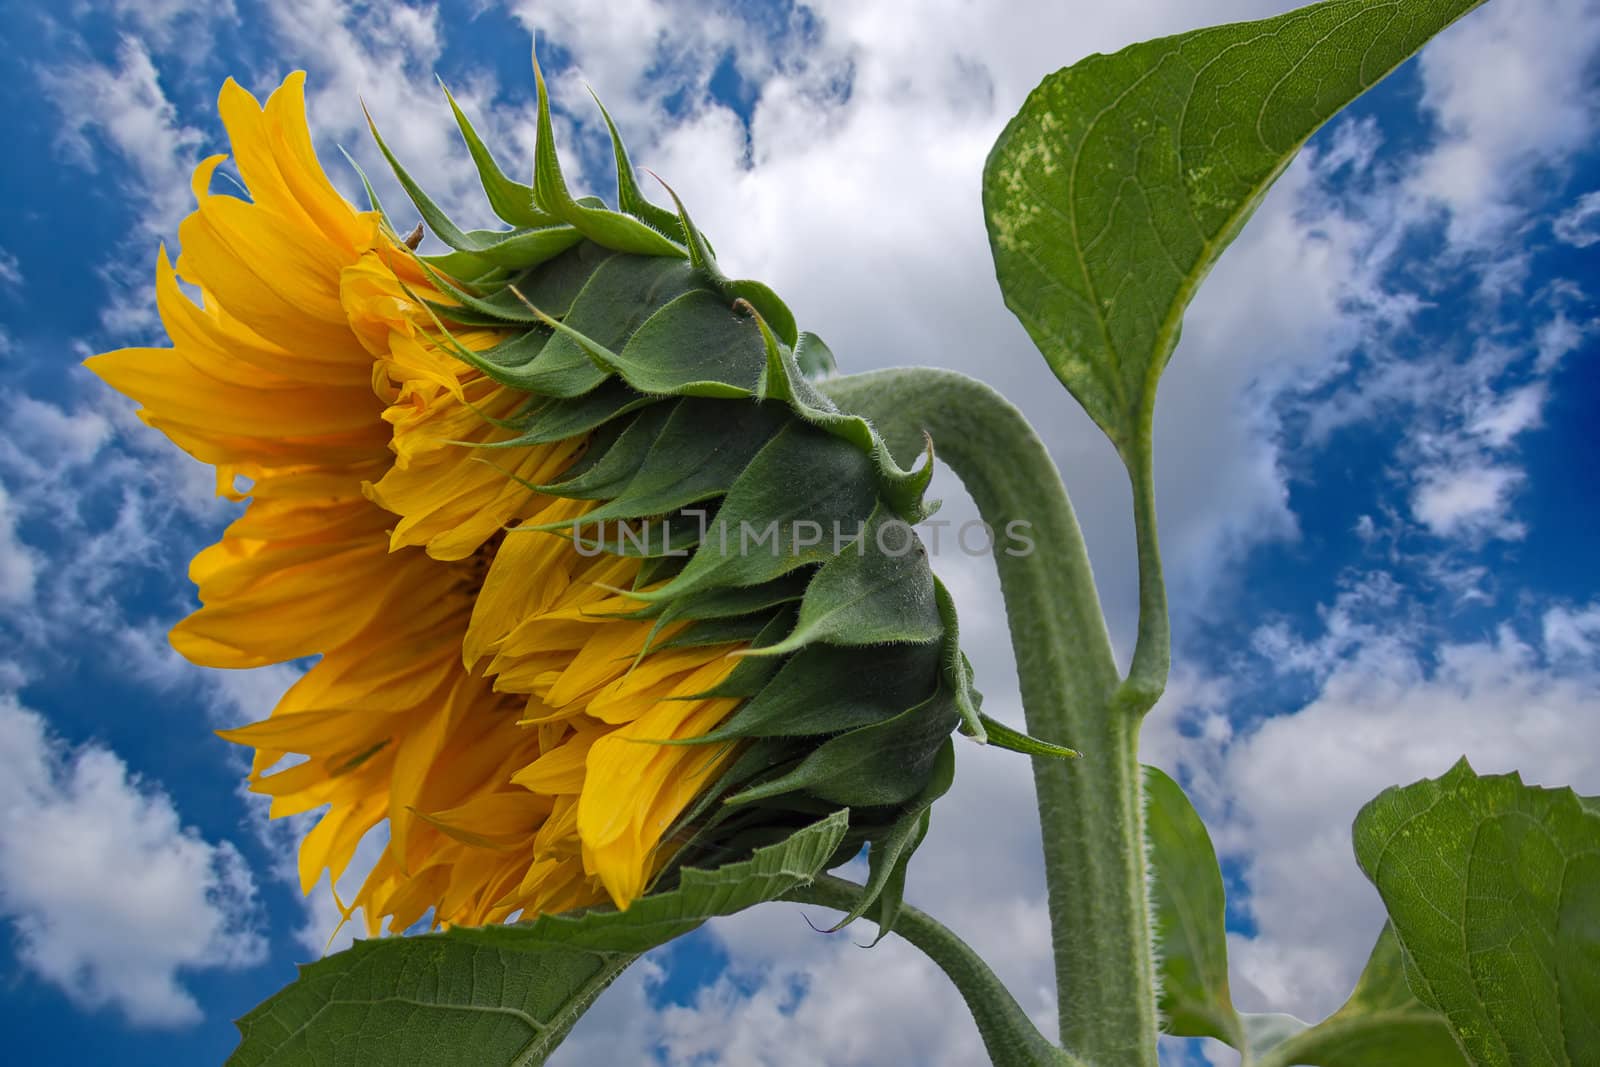 Flower of sunflower close up against blue sky.